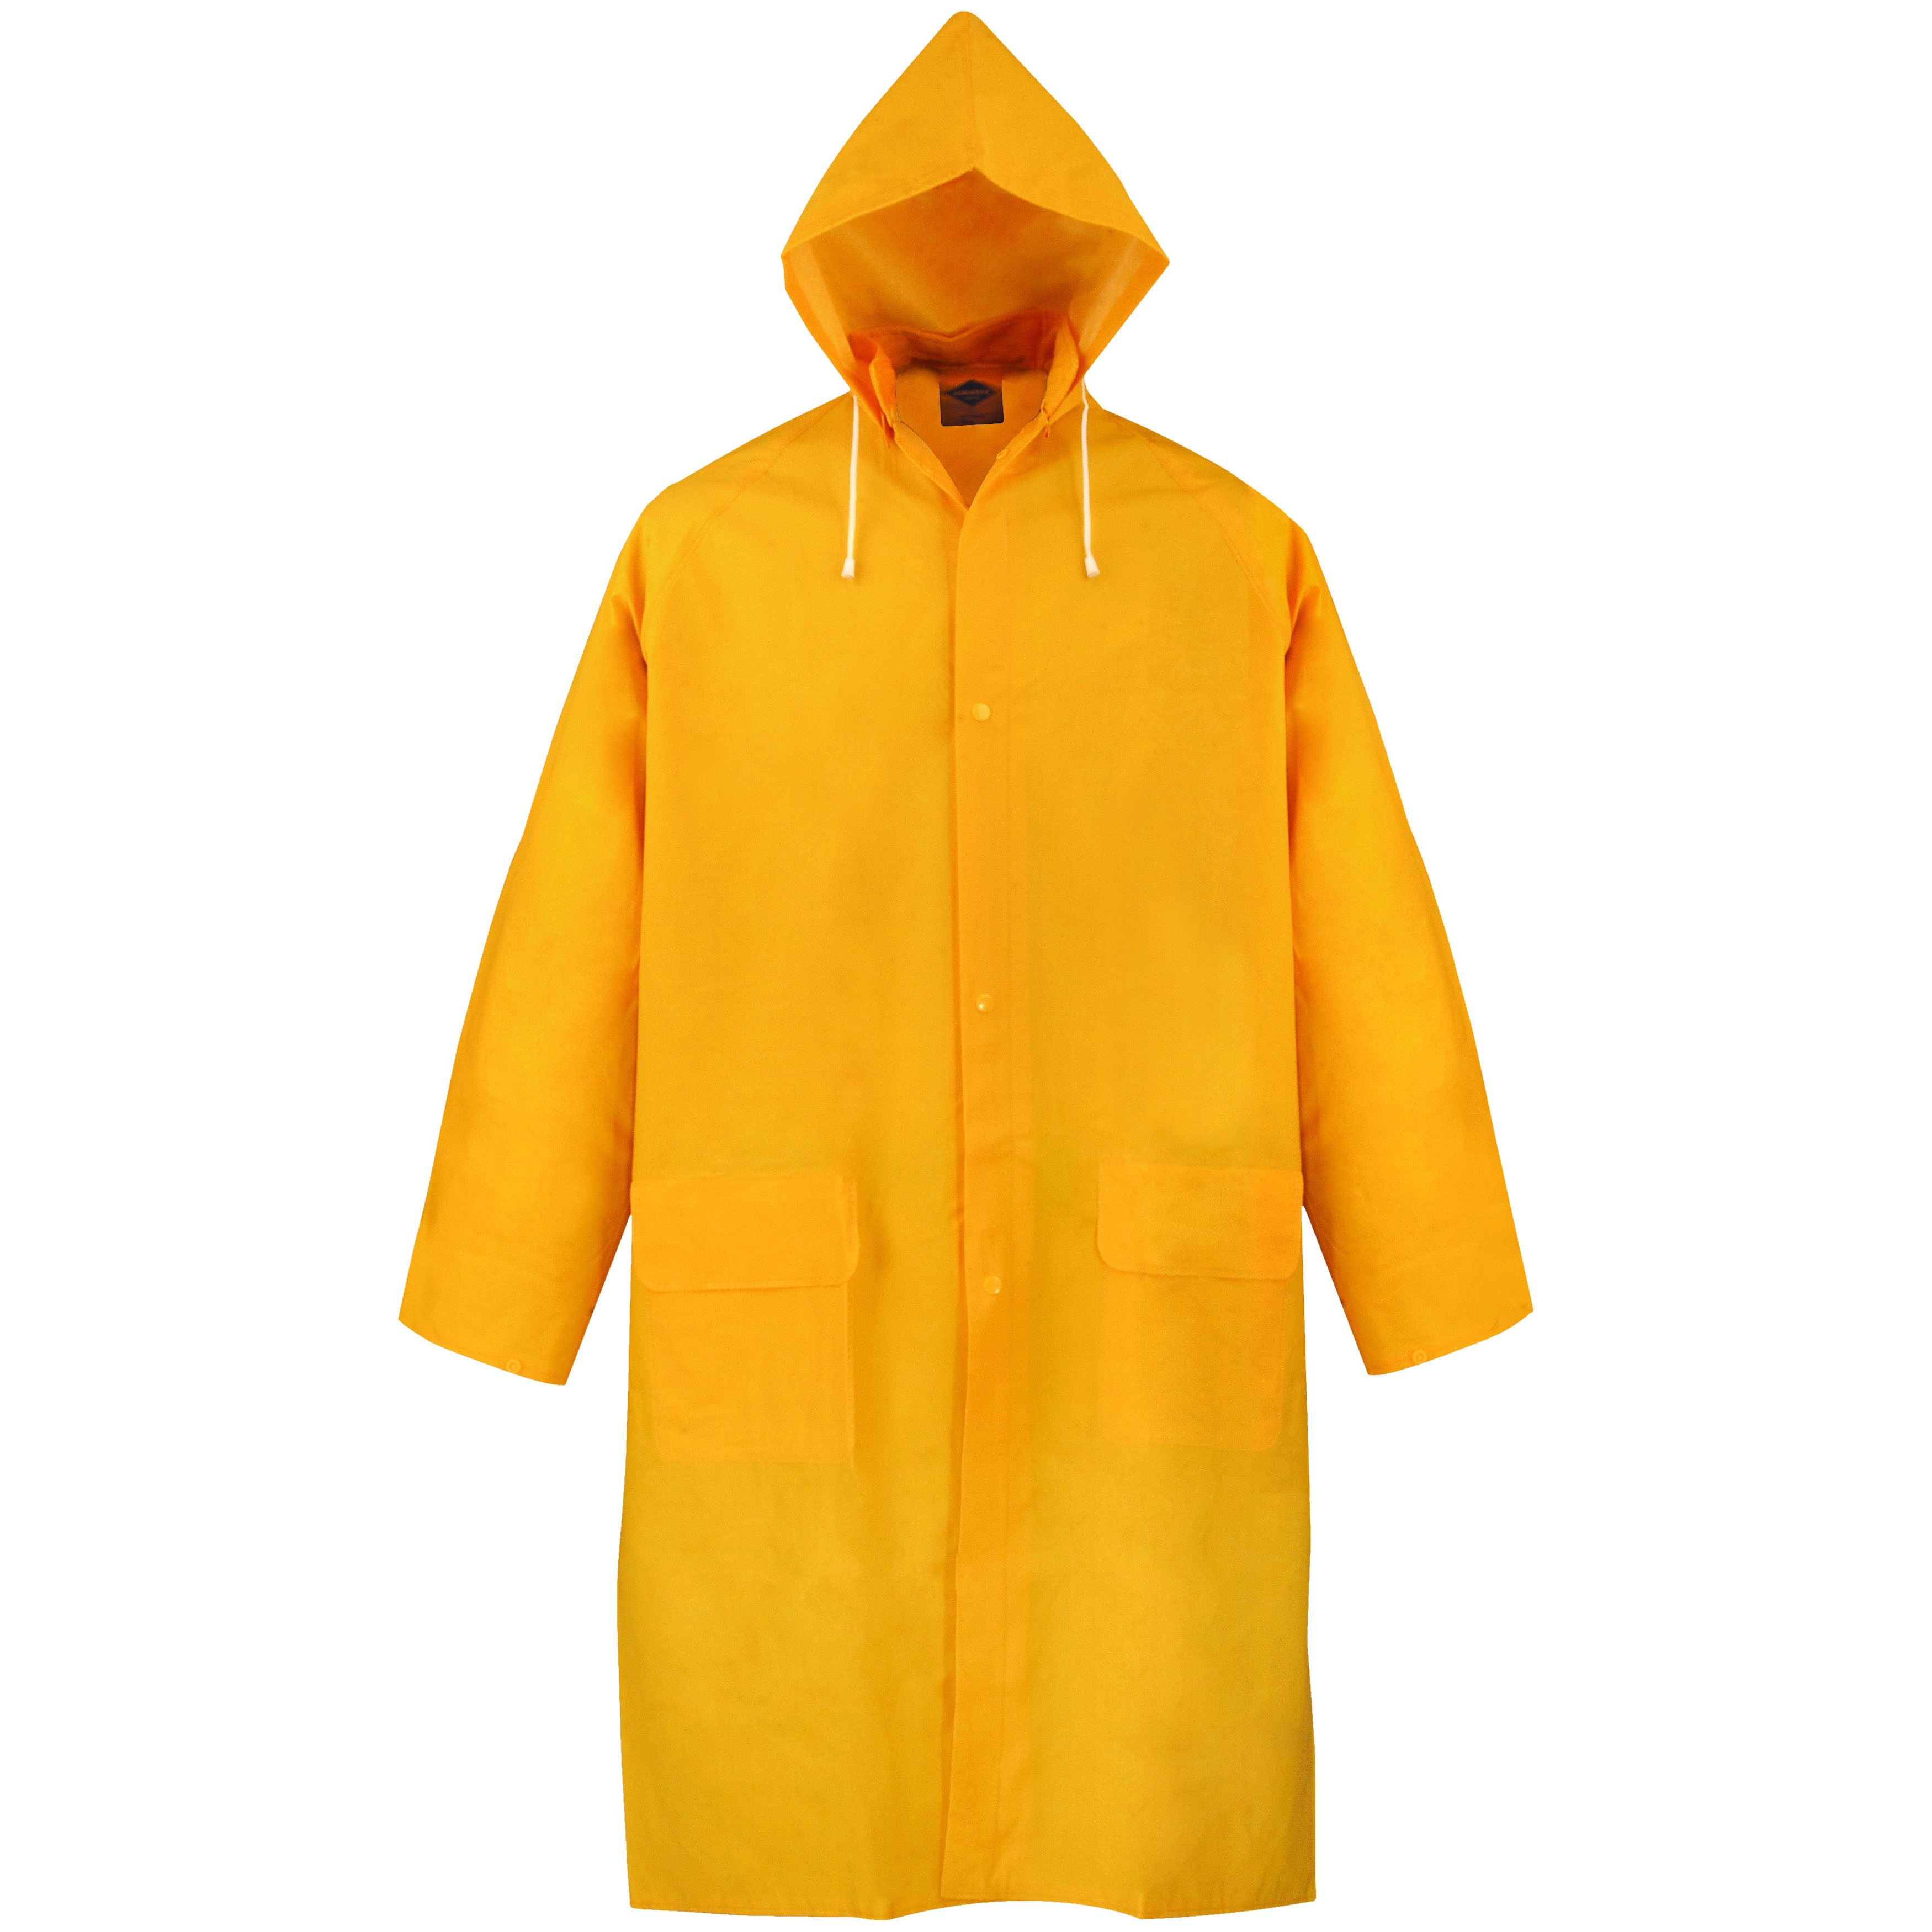 PY800XXXL Raincoat, 3XL, Polyester/PVC, Yellow, Comfortable Corduroy Collar, Double Fly Snap Closure, Knee